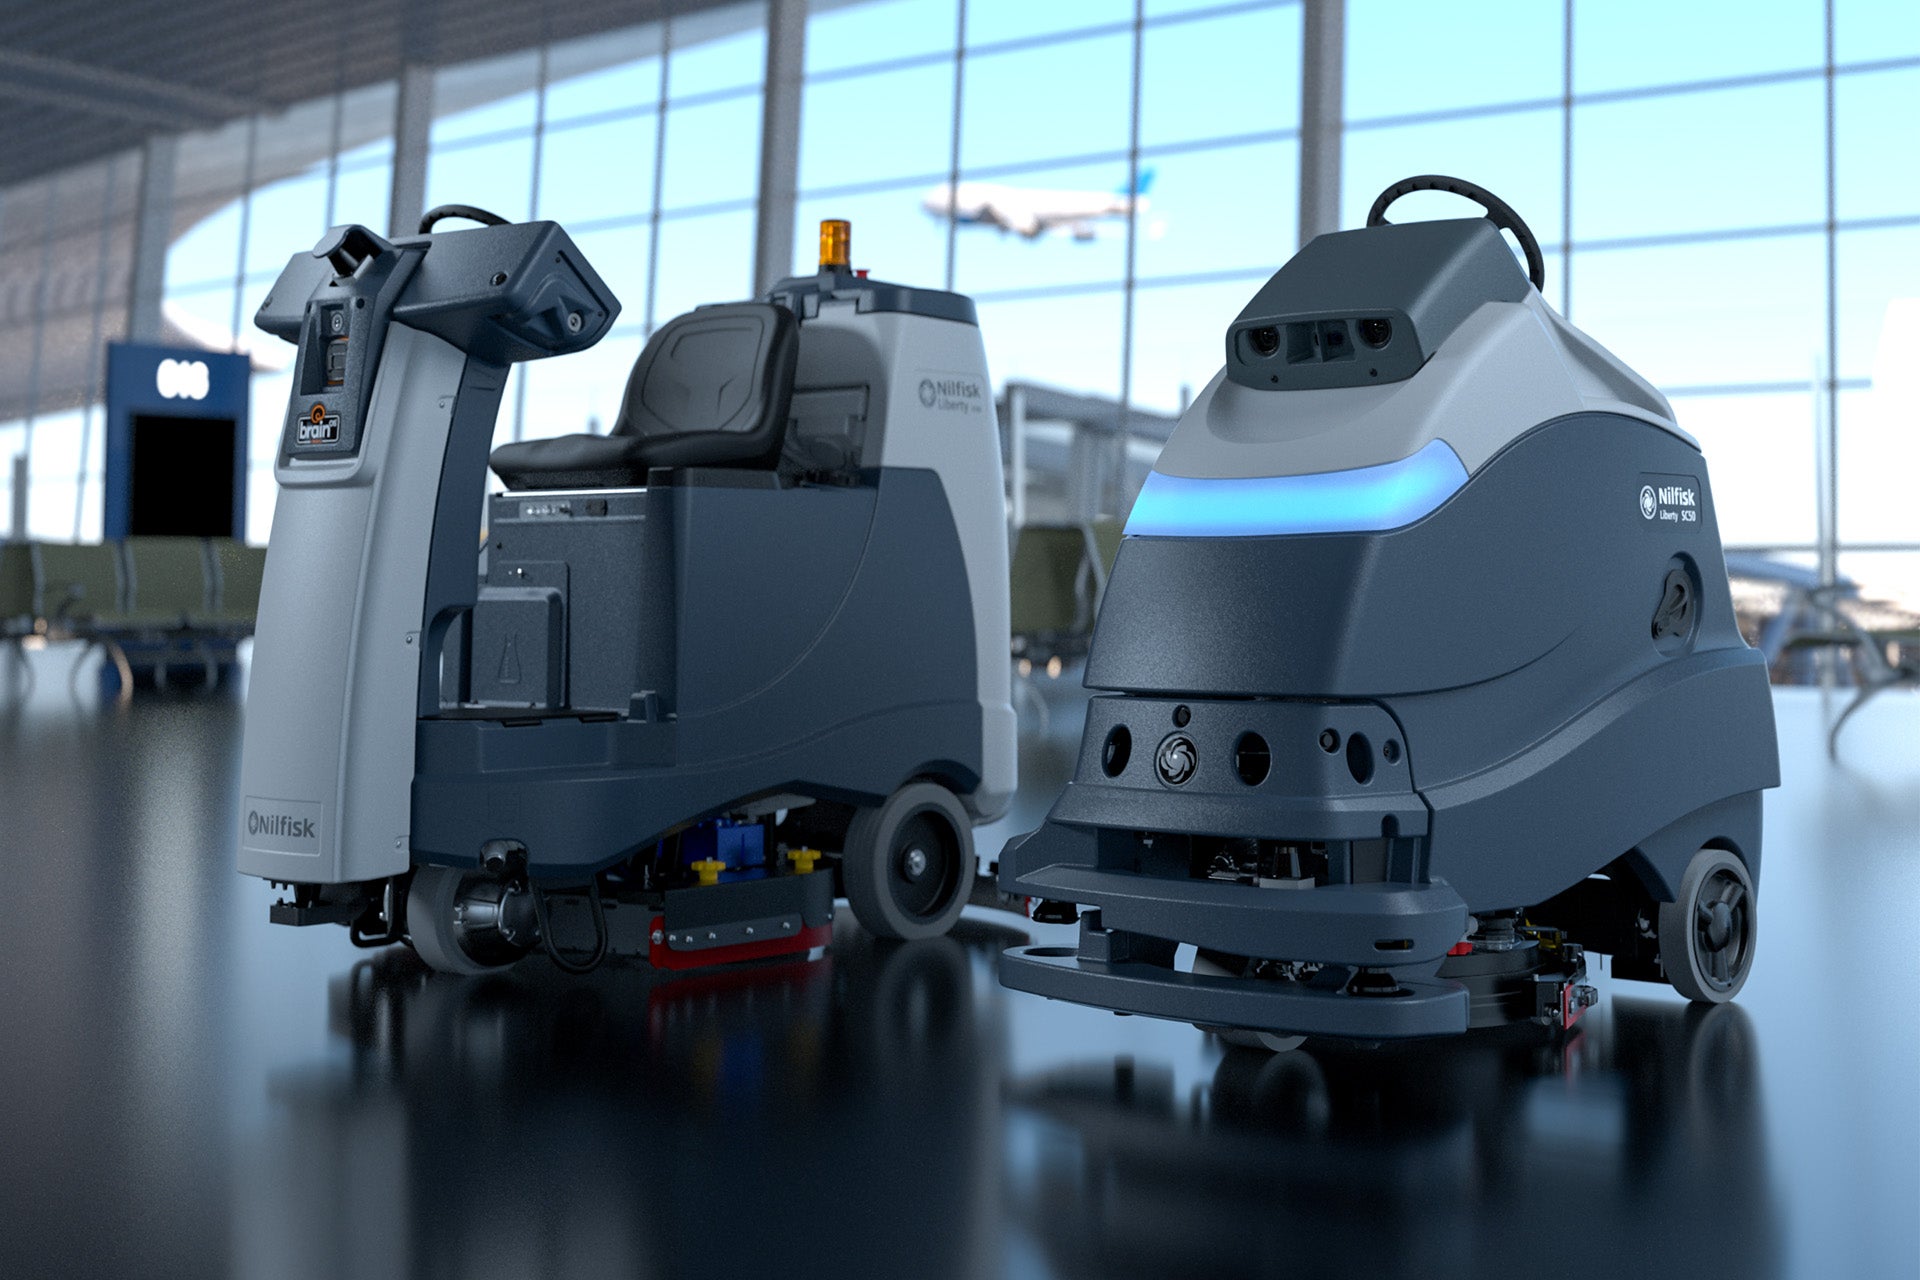 Nilfisk autonomous cleaning equipment